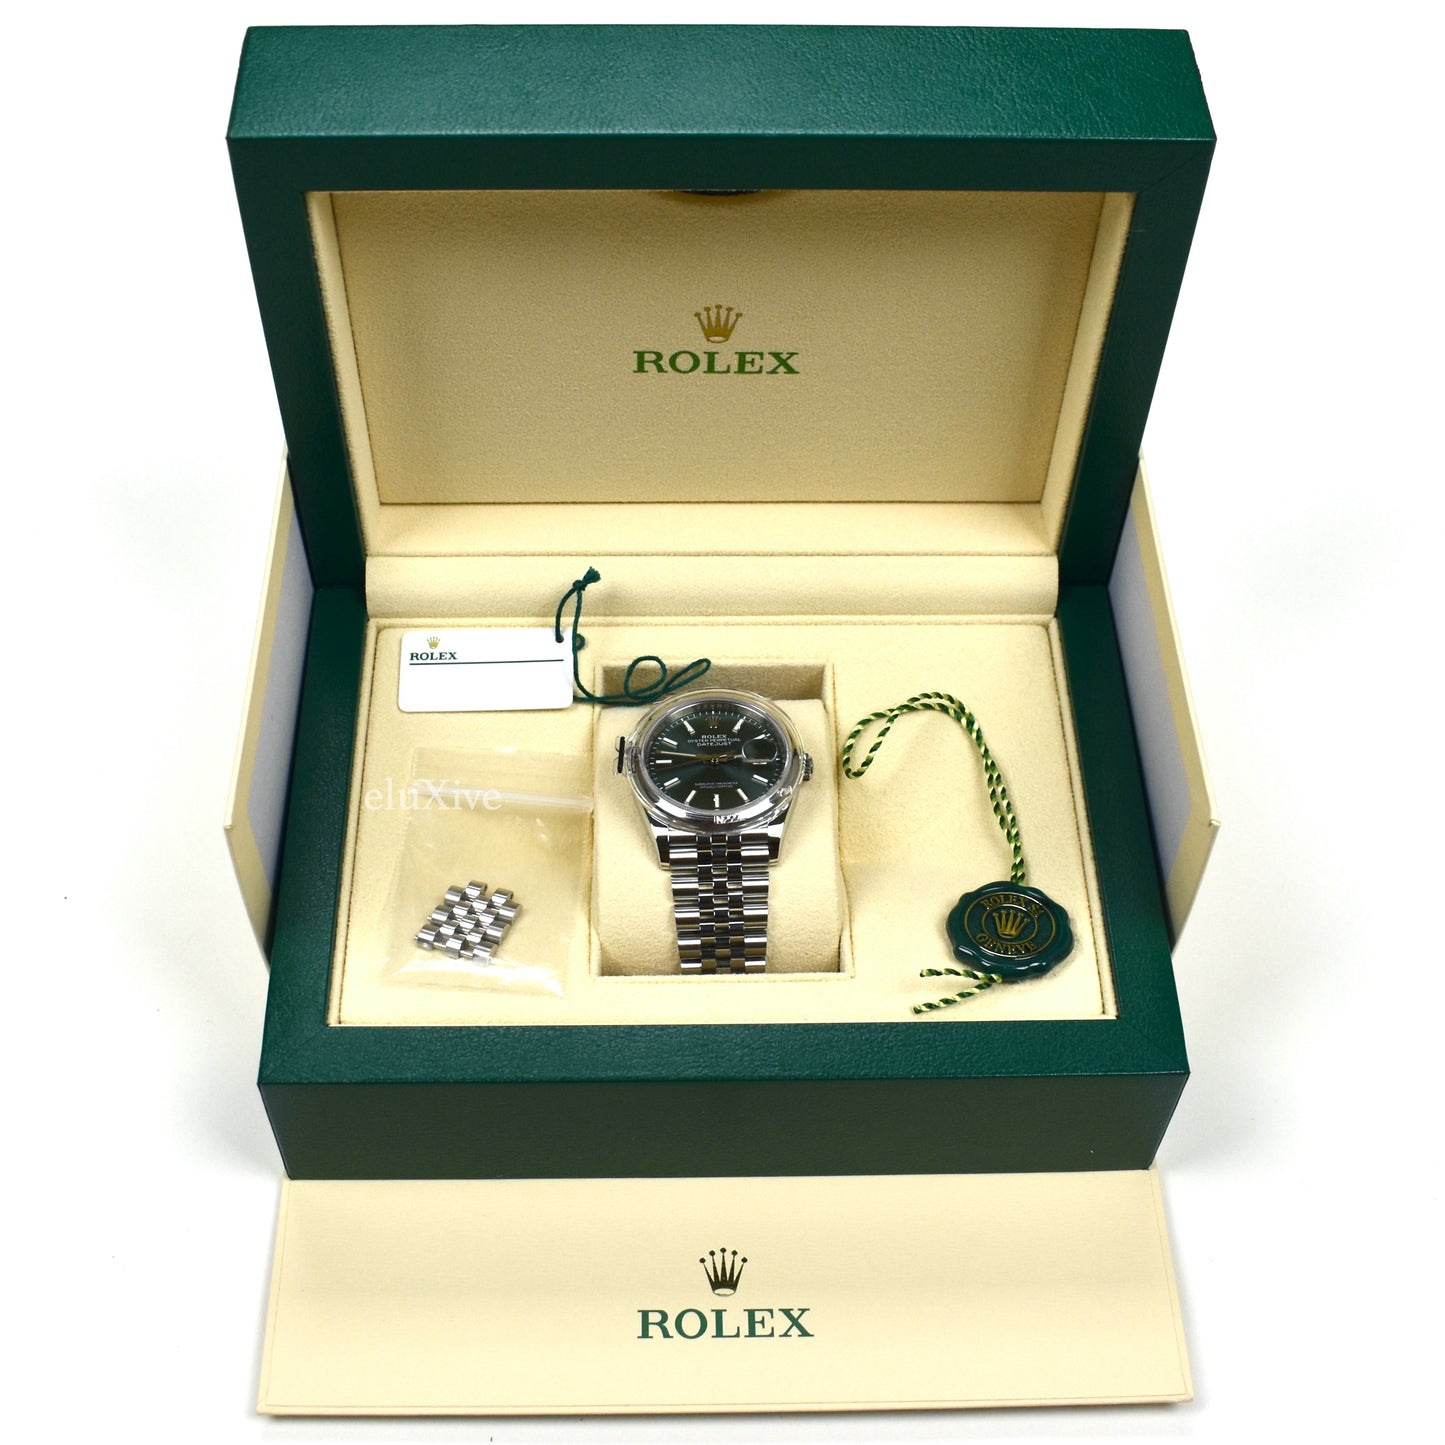 Rolex - Datejust 36 Mint Green Dial Watch, B&P (126200)